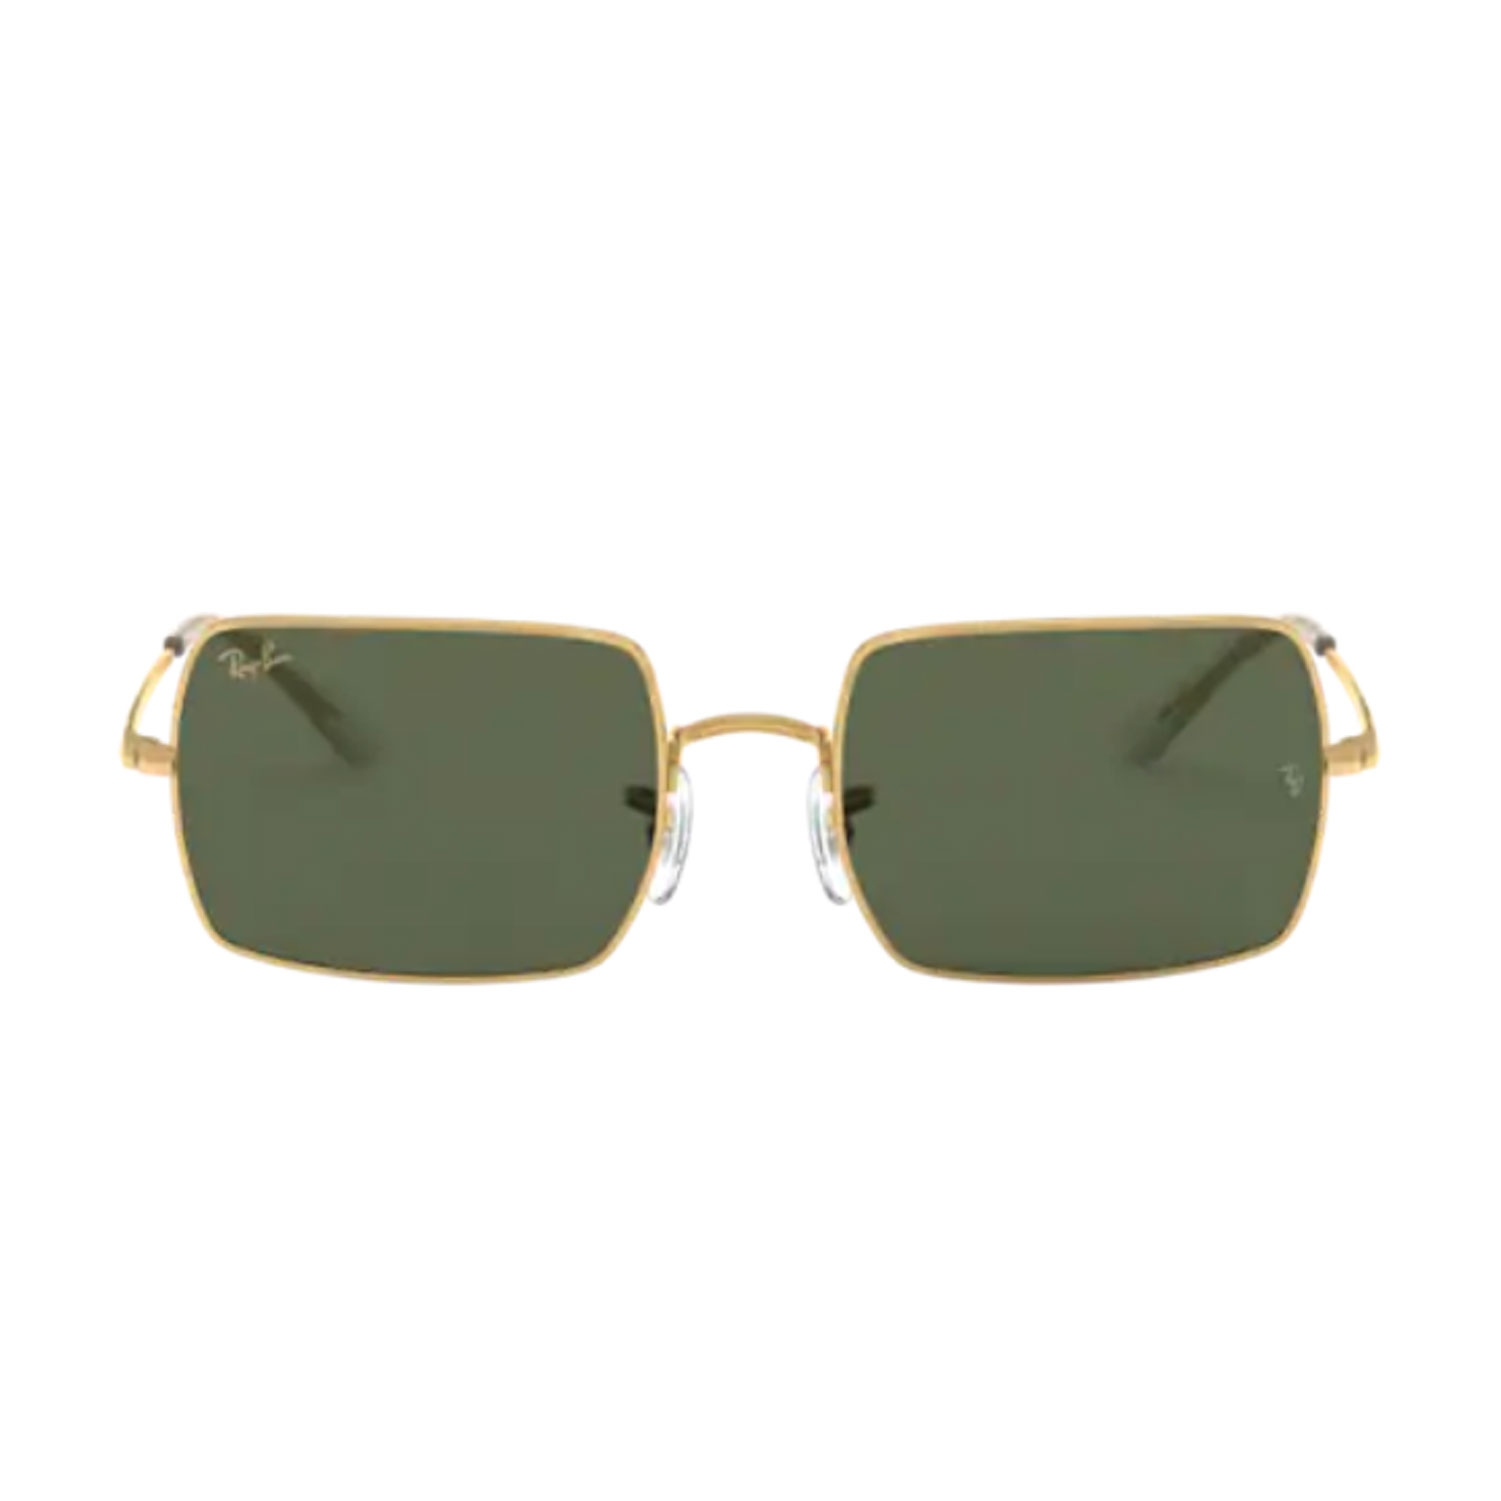 Man sunglasses women ray ban MBR 1969 919631 Gold Rectangular Green | eBay